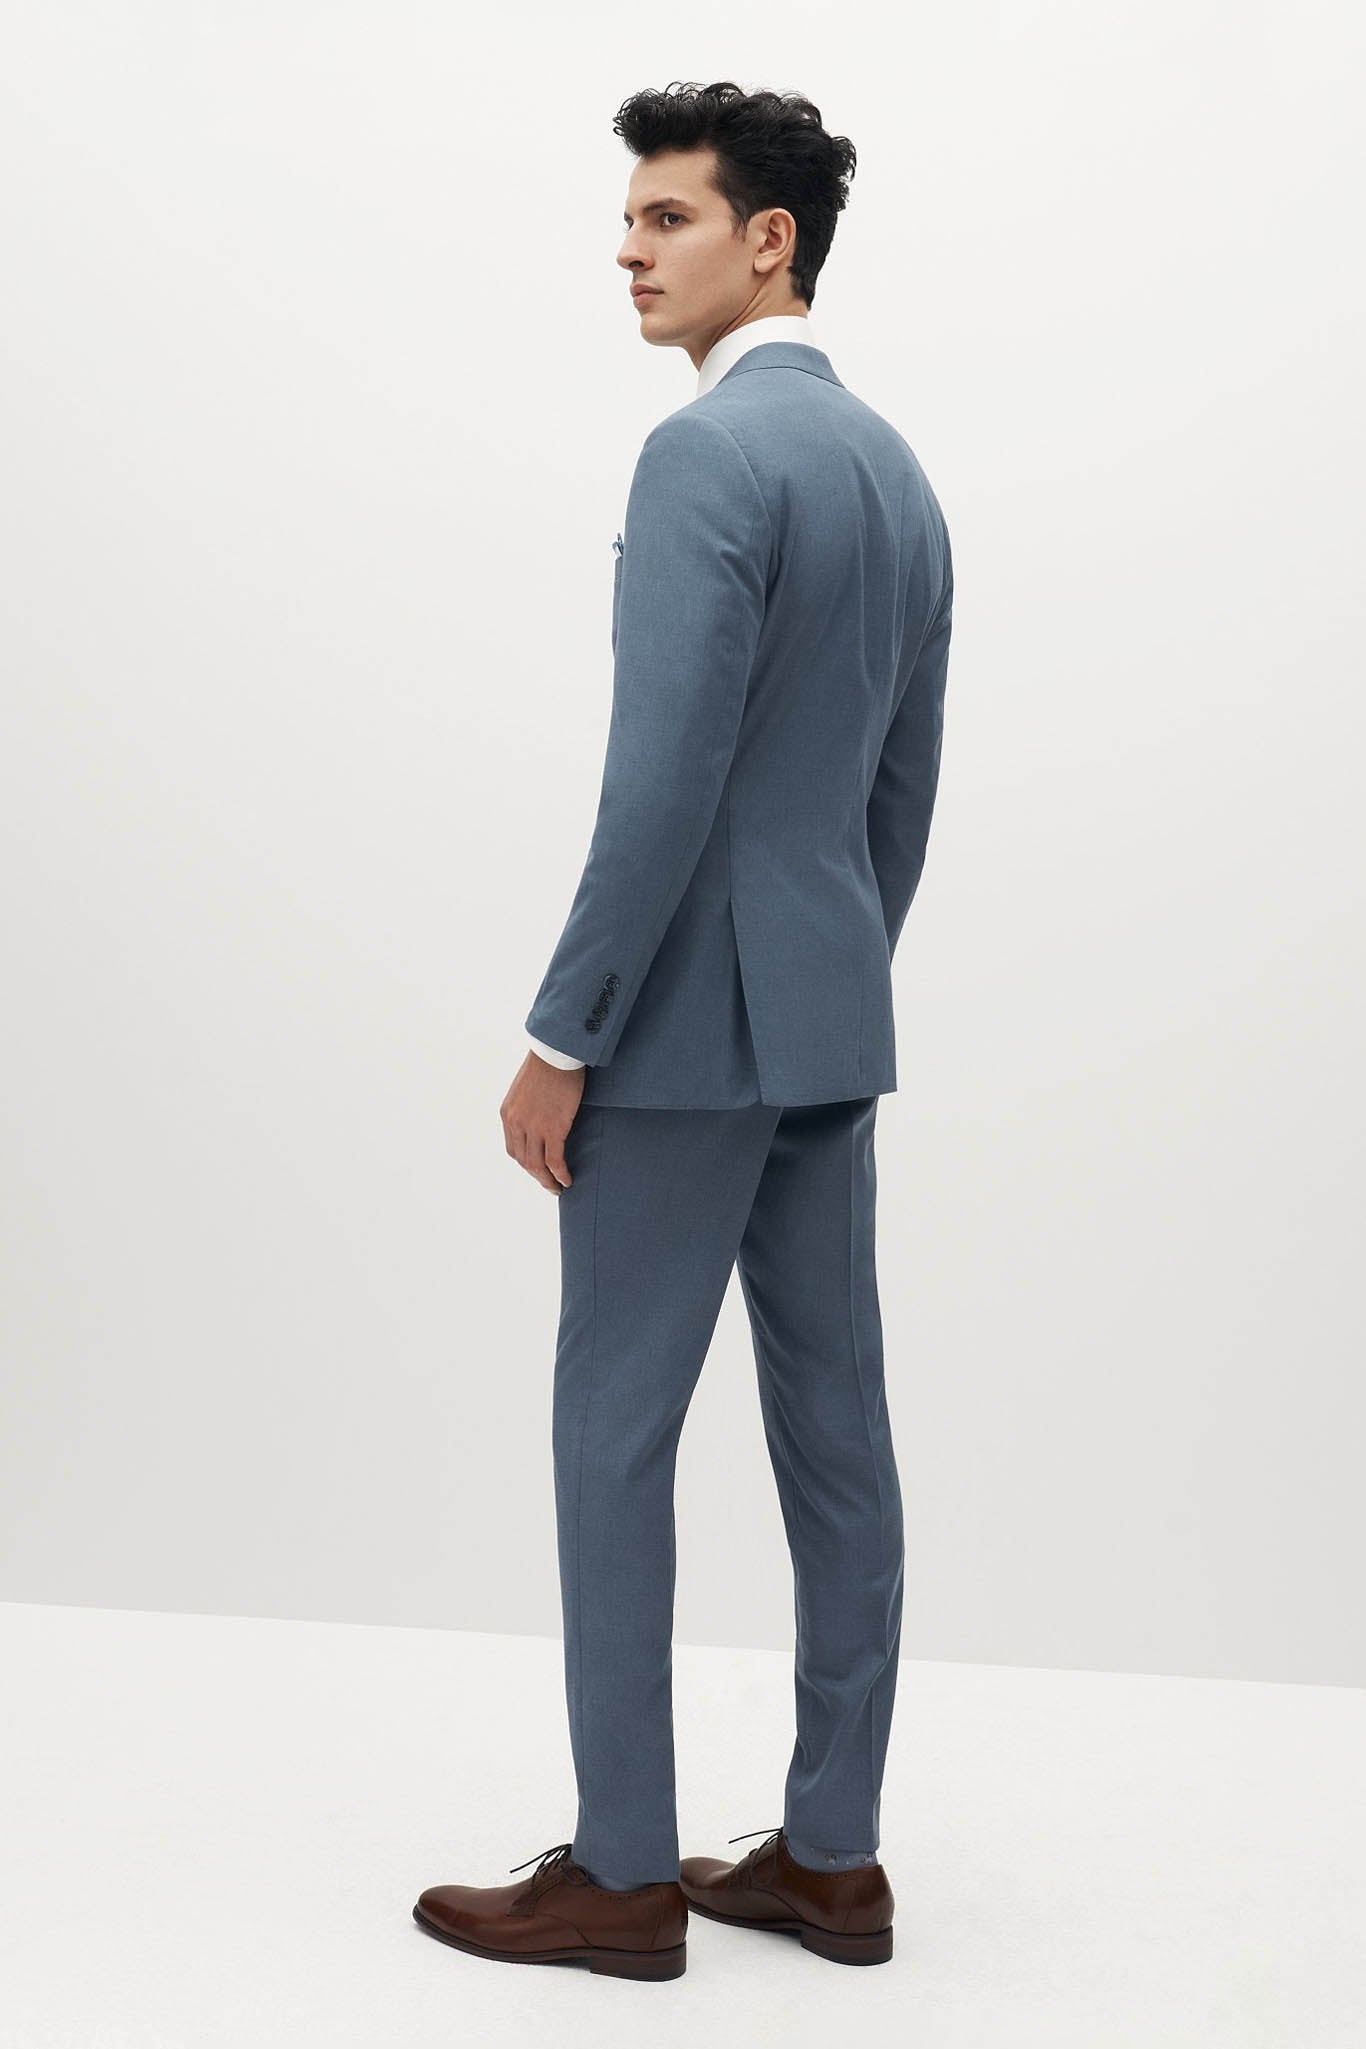 Light Blue Groomsman Suit by SuitShop